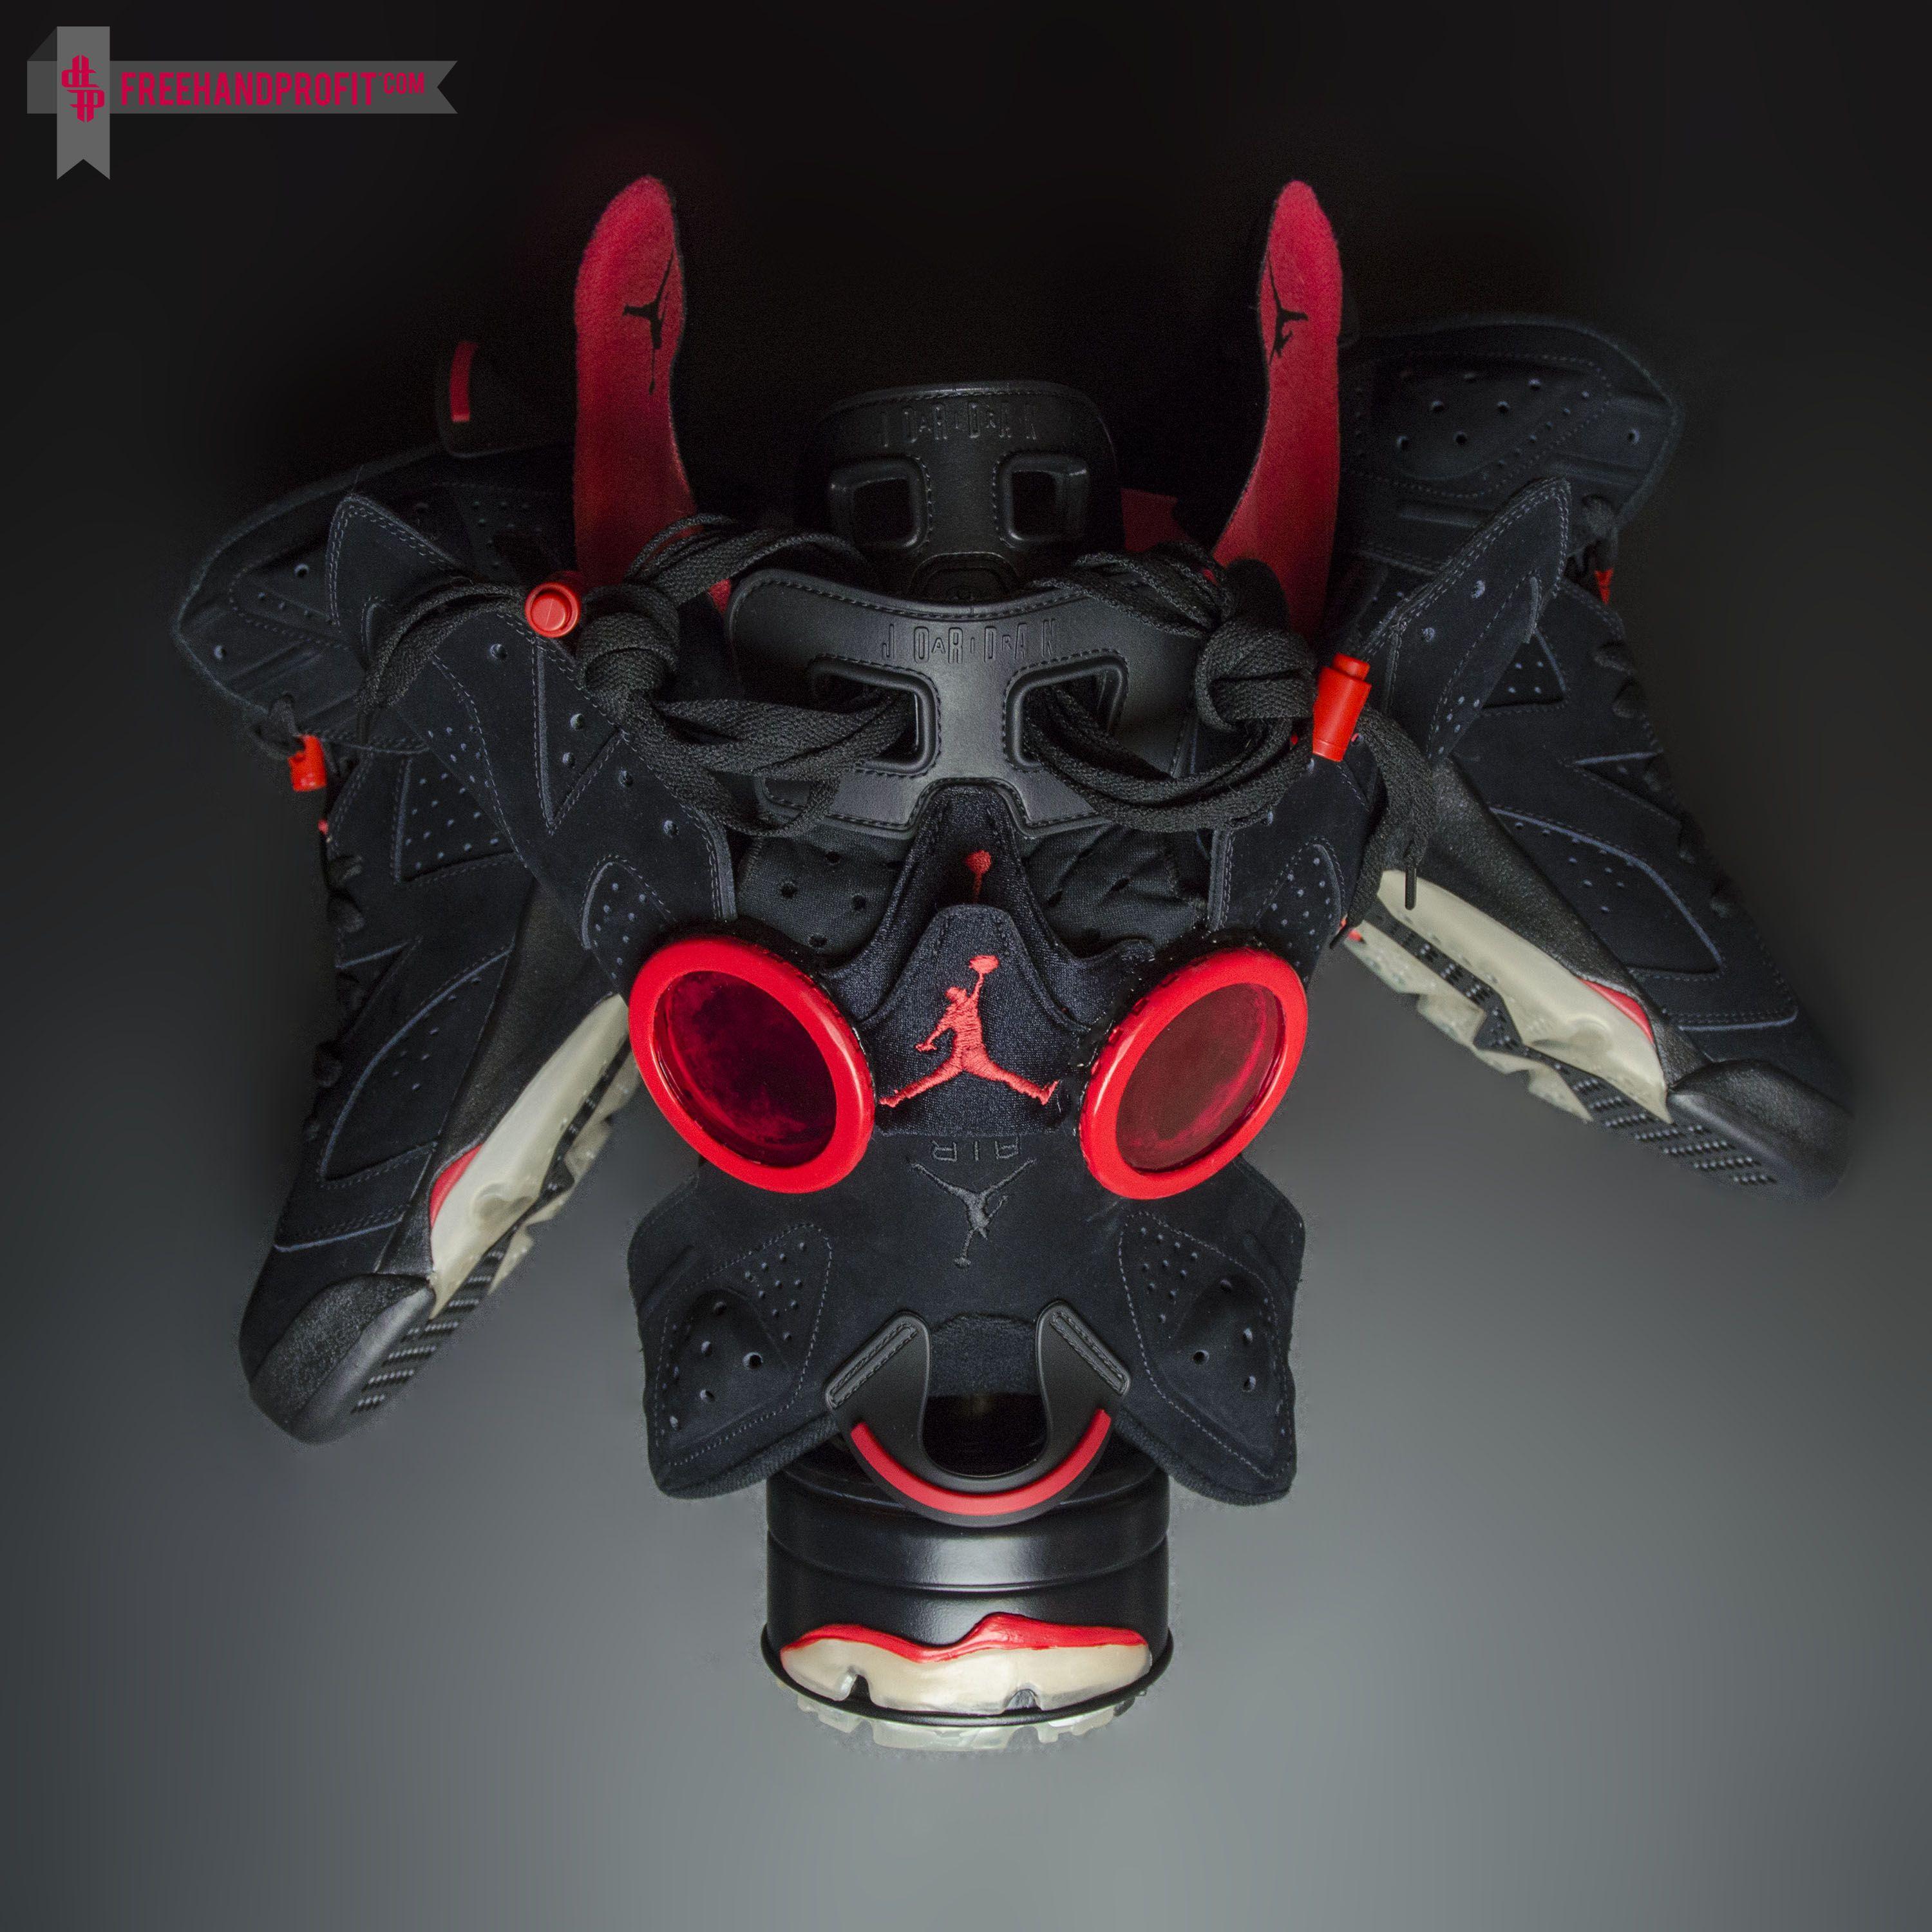 Graffiti Jordan Logo - Air Jordan VI (6) “Black Infrared” Gas Mask